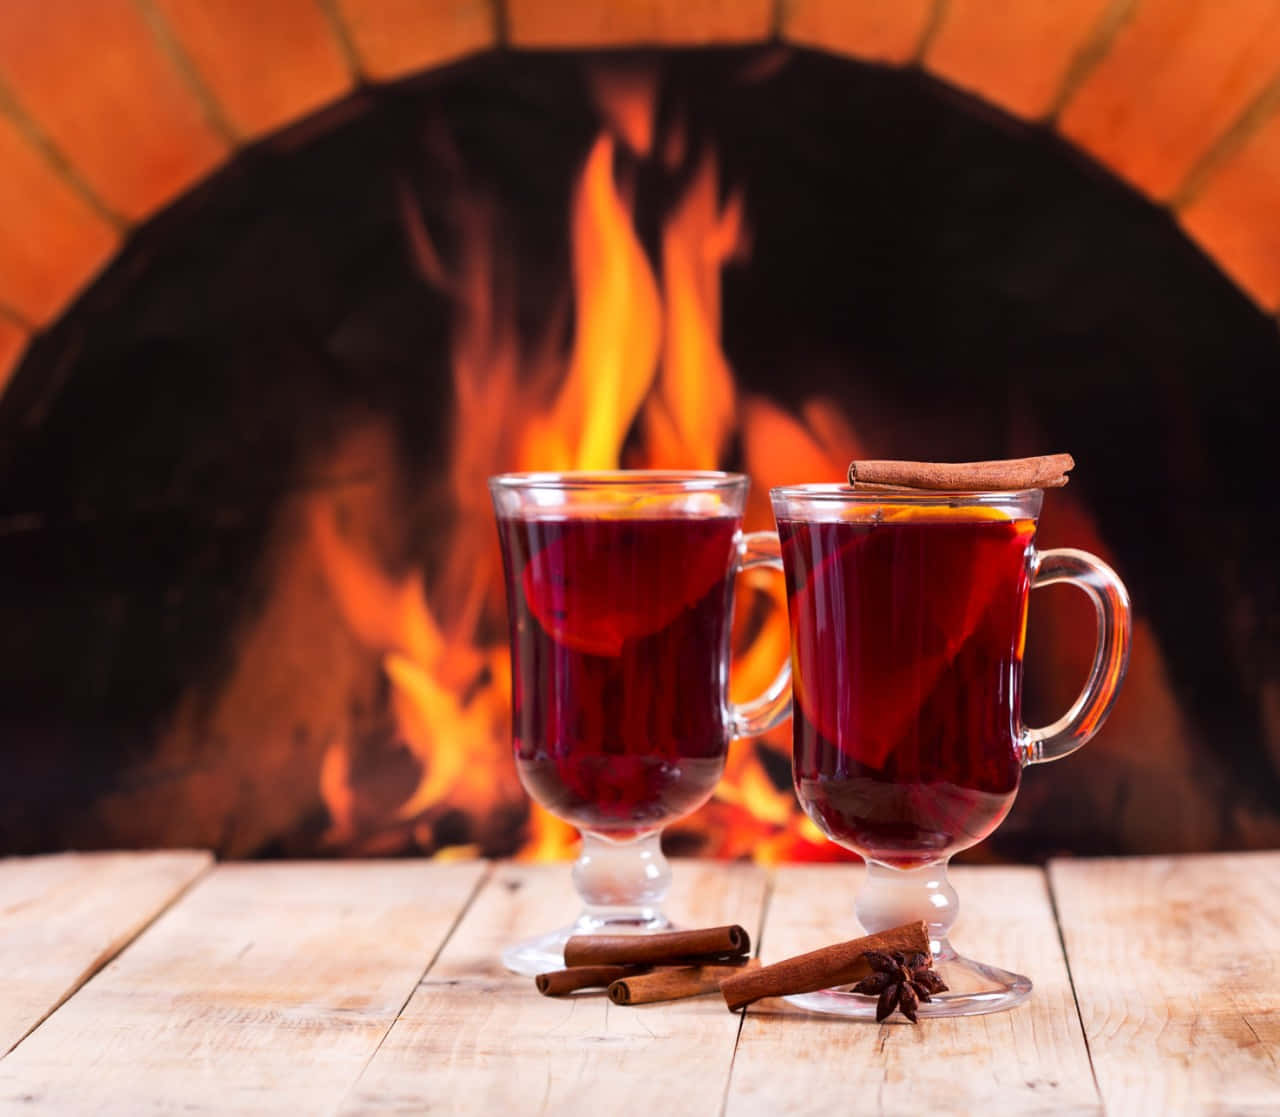 Warm Winter Drinks by The Fireplace Wallpaper